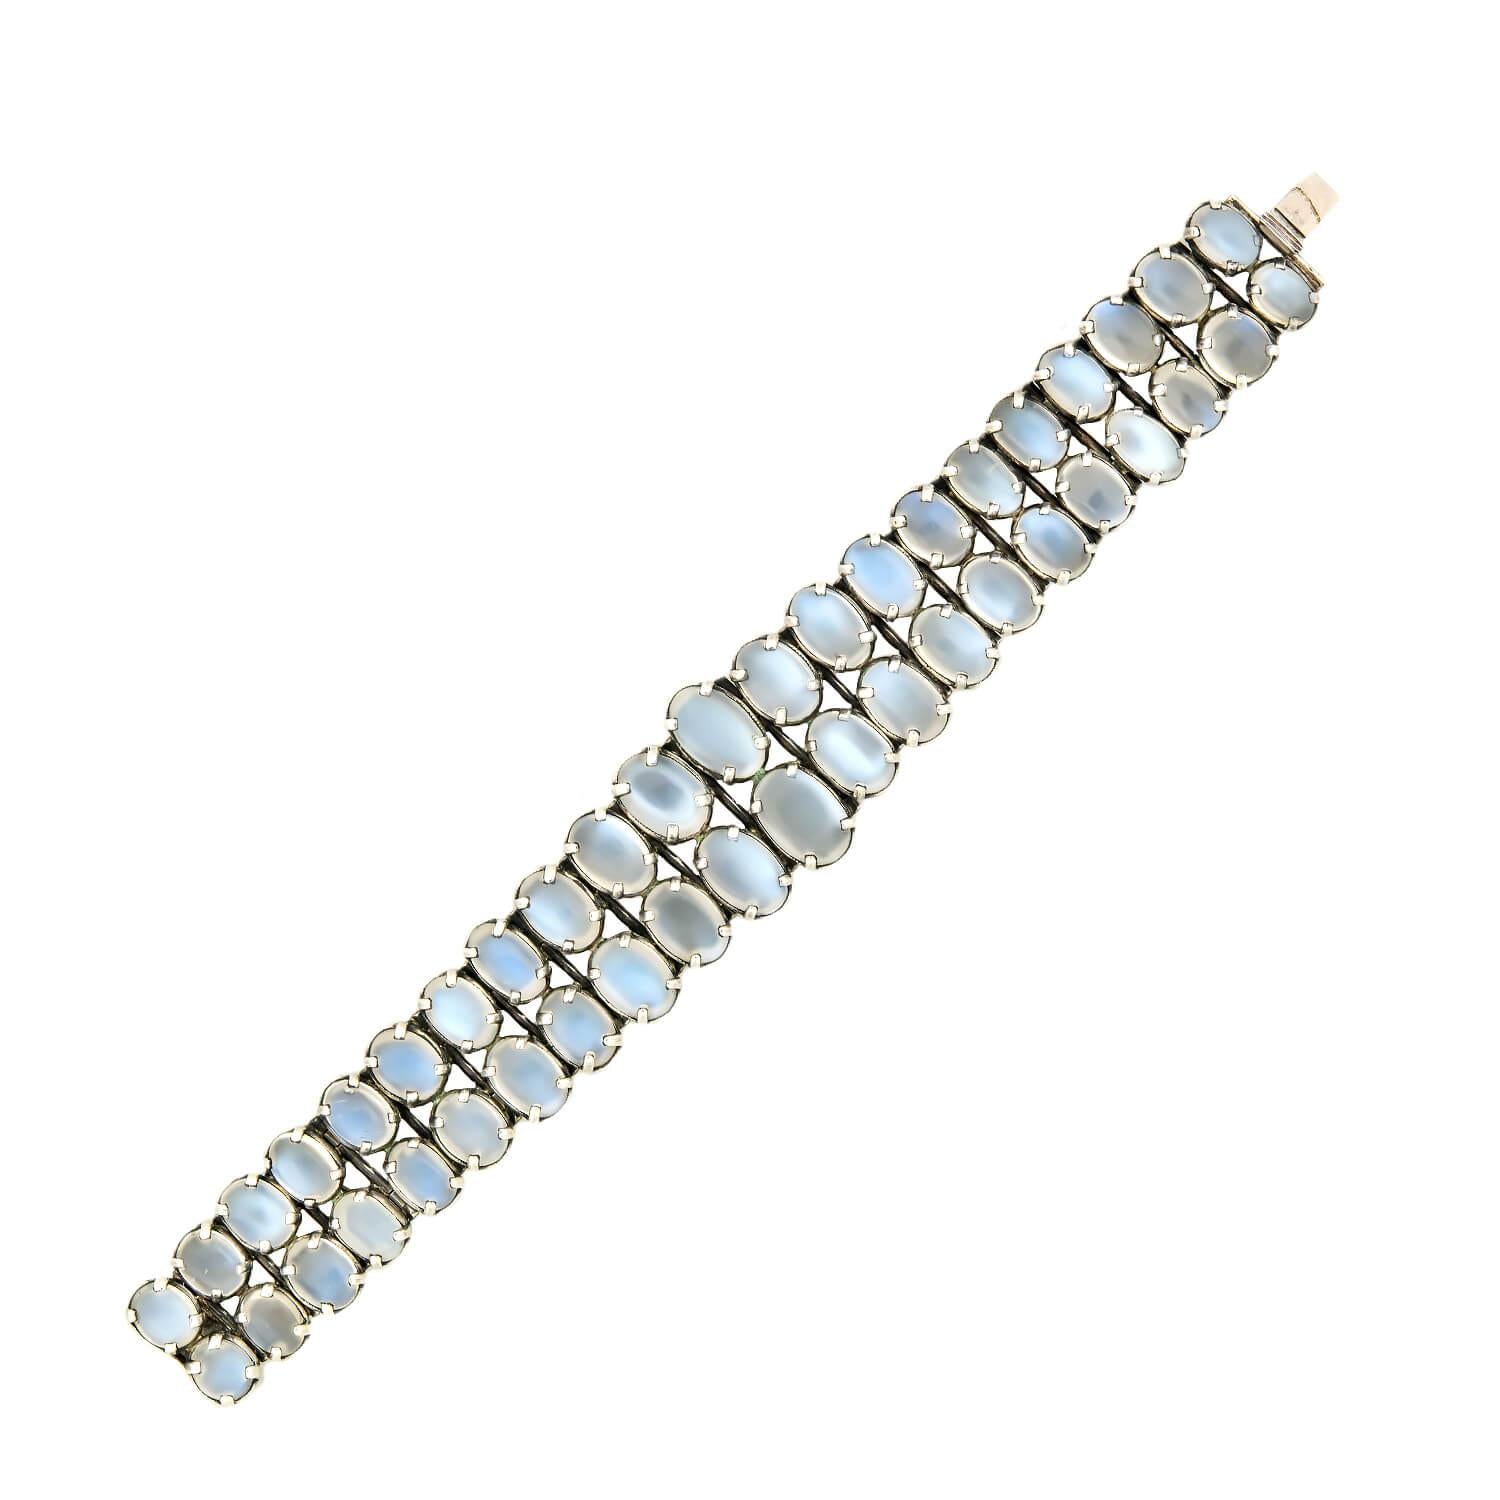 Vintage Sterling Silver 2 Rows Graduated Moonstone Bracelet